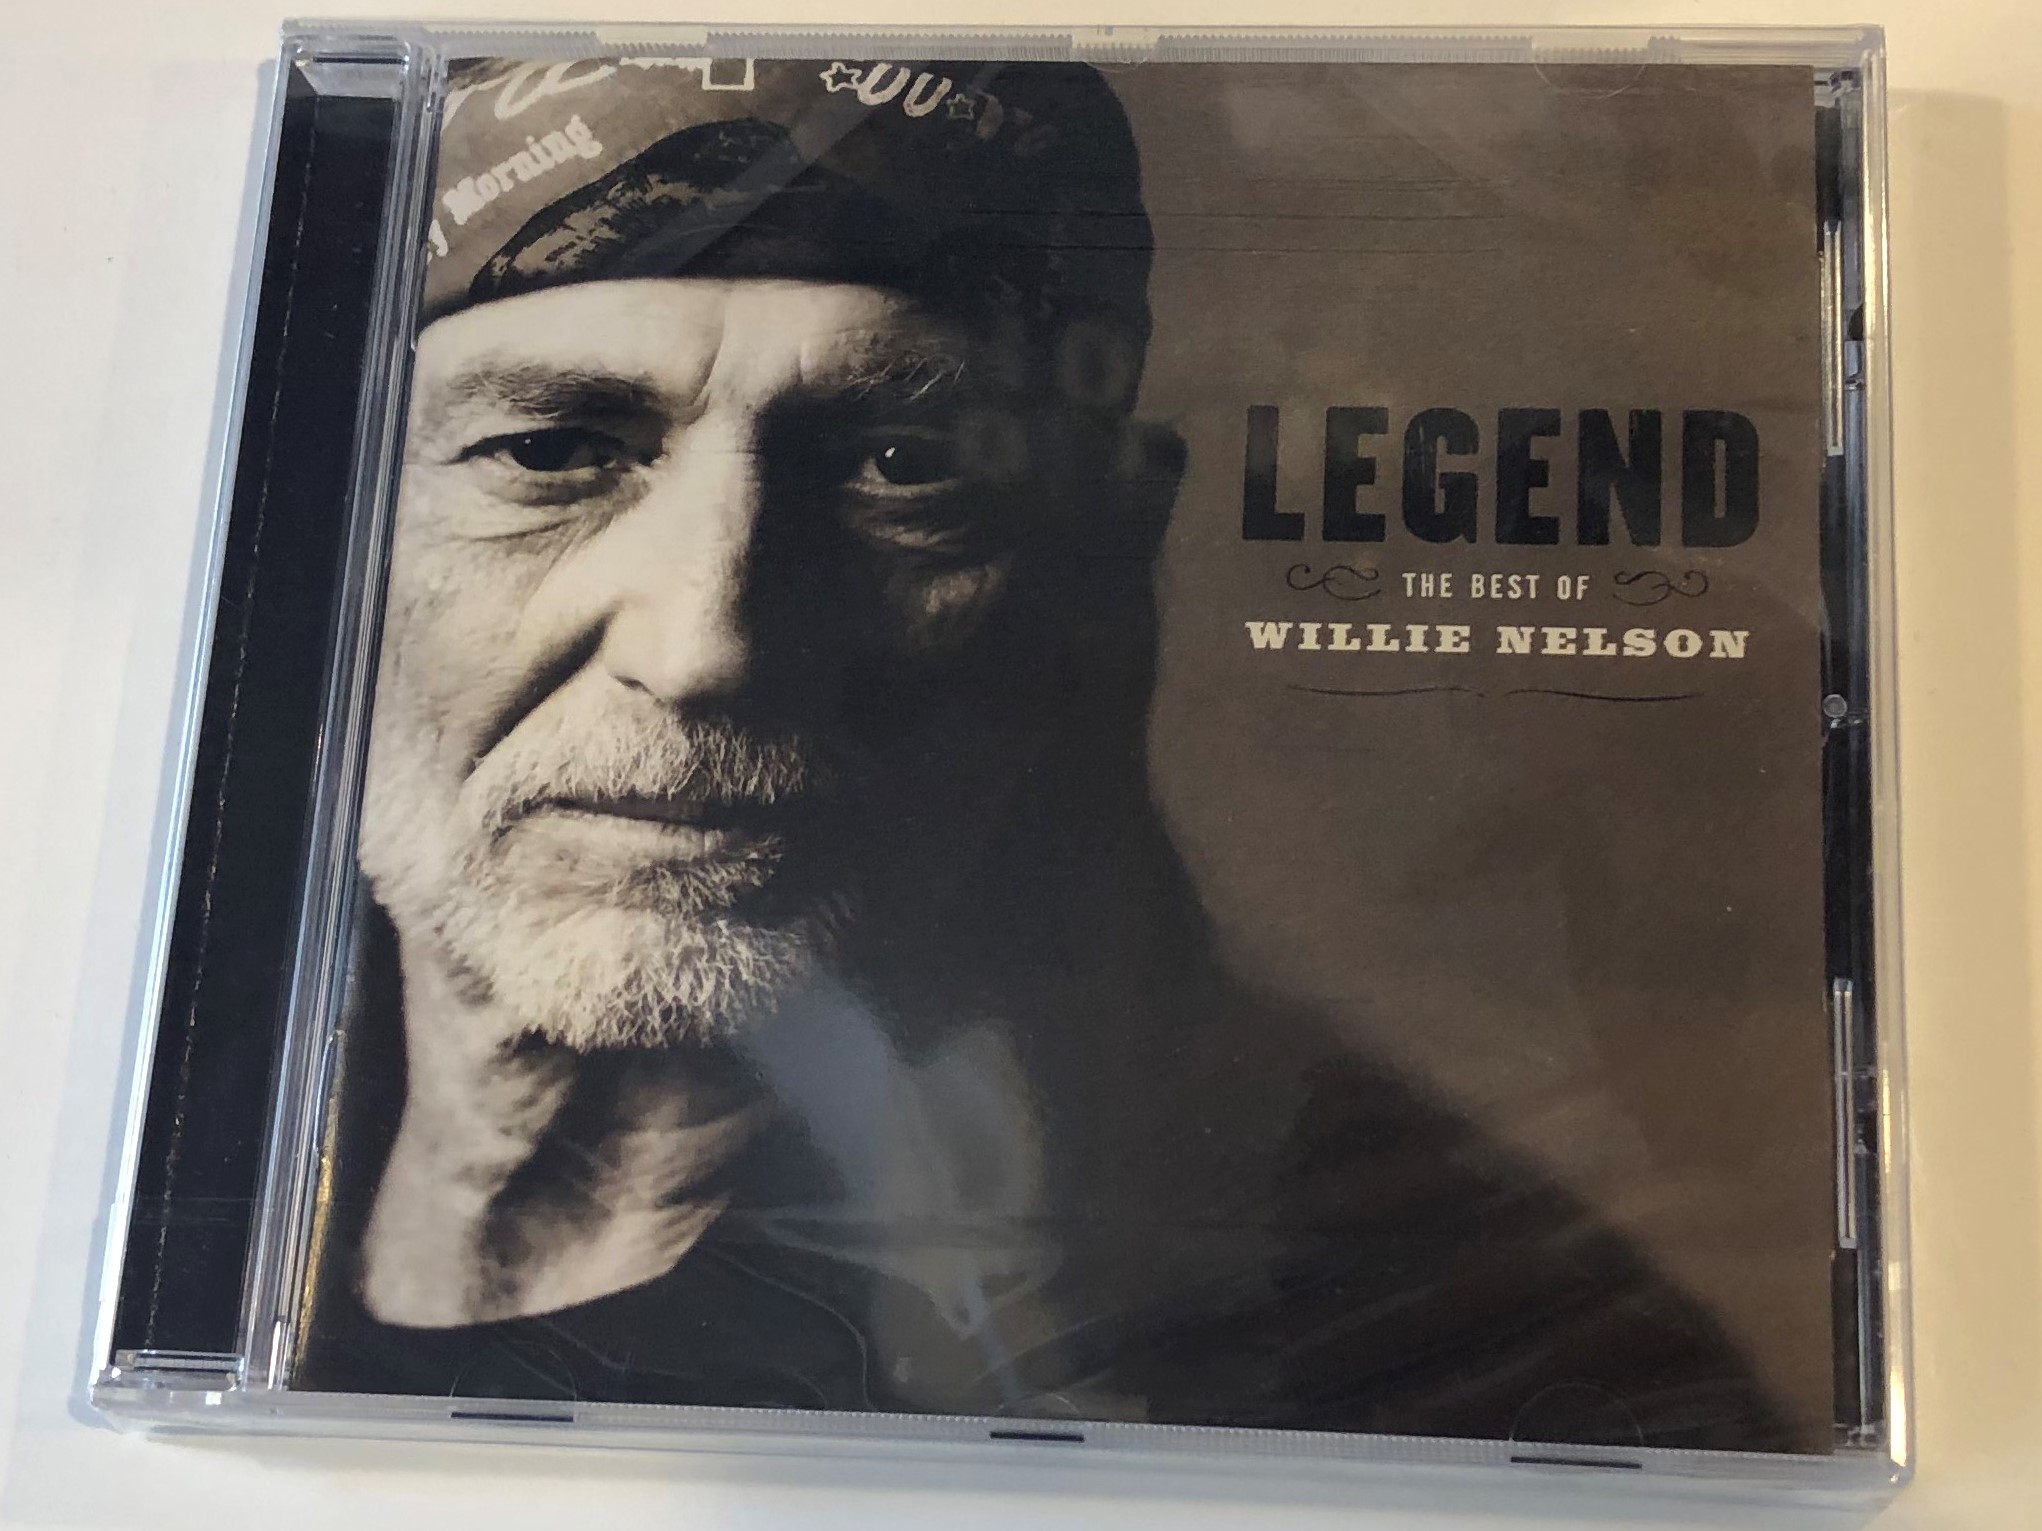 legend-the-best-of-willie-nelson-sony-bmg-music-entertainment-audio-cd-2008-88697292832-1-.jpg